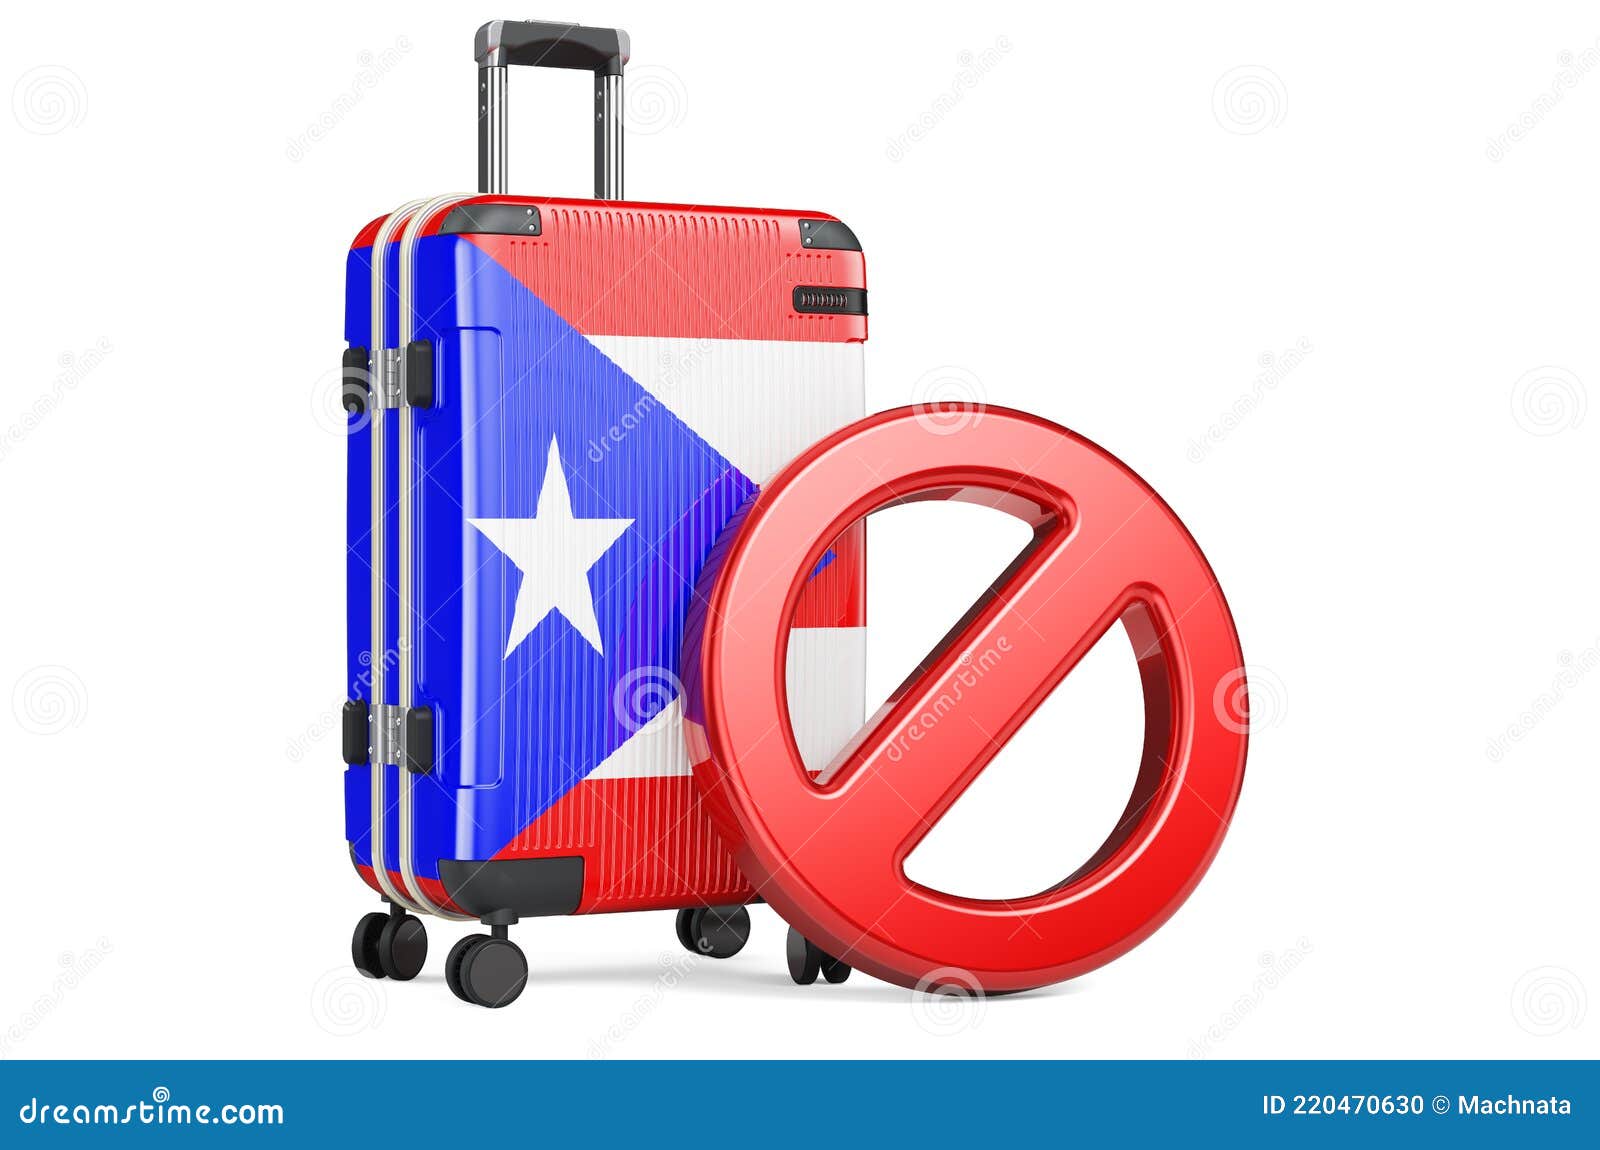 travel ban puerto rico